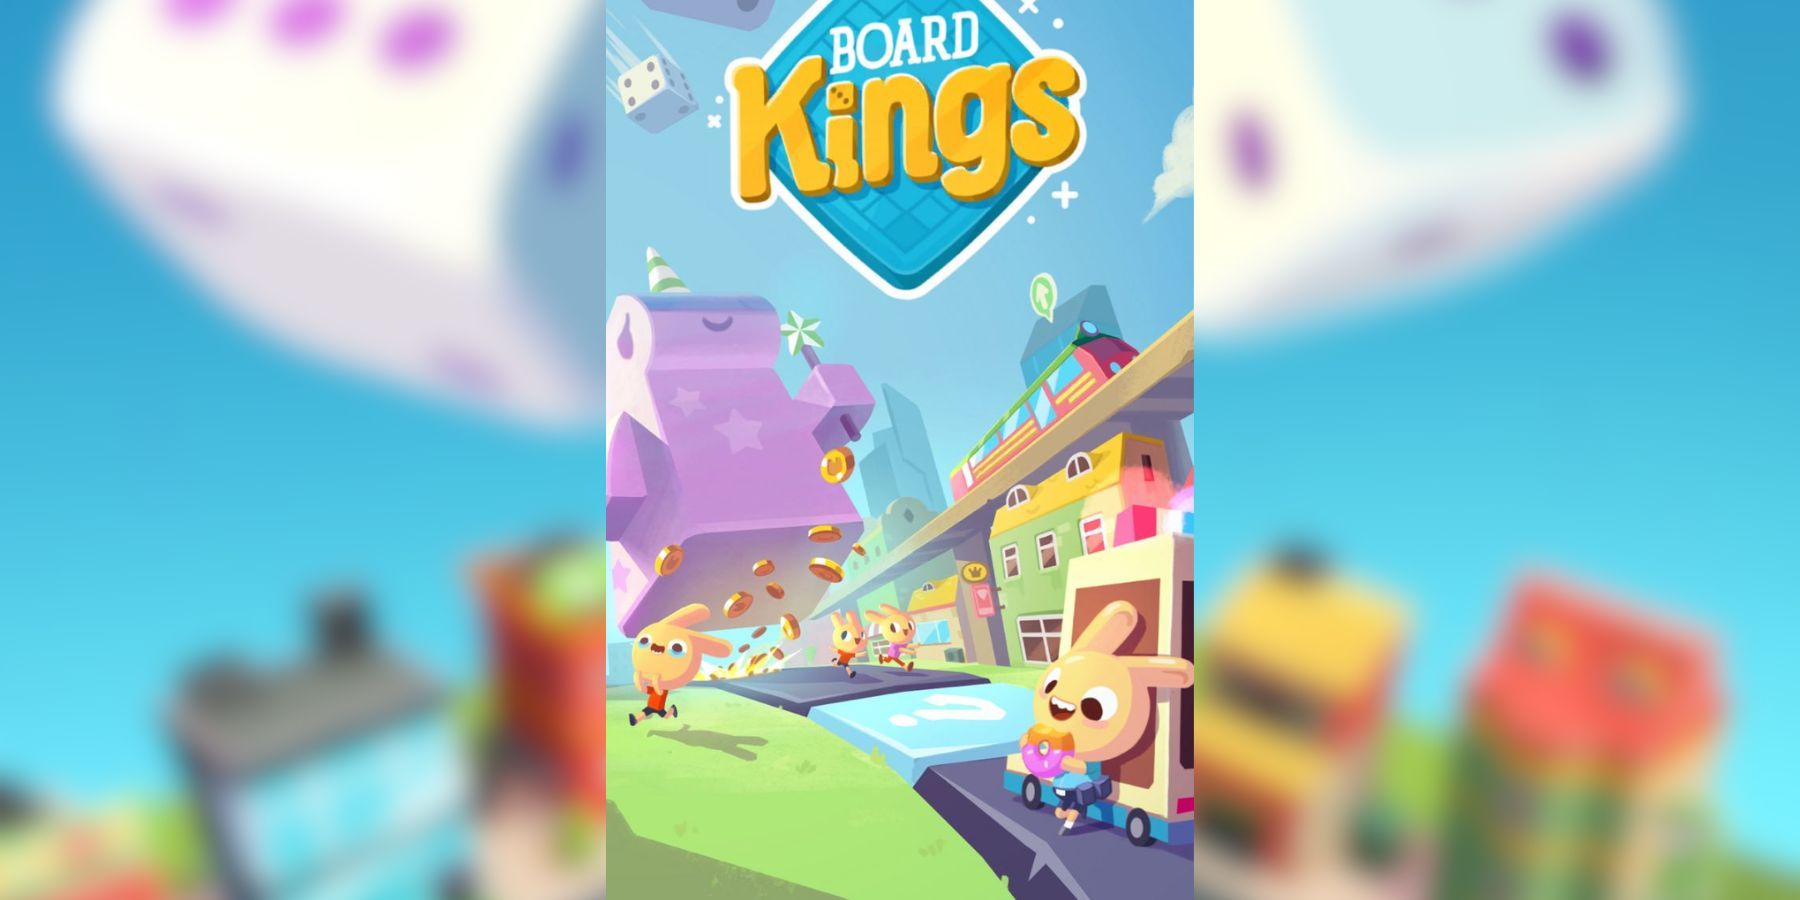 startup screen for Board Kings.